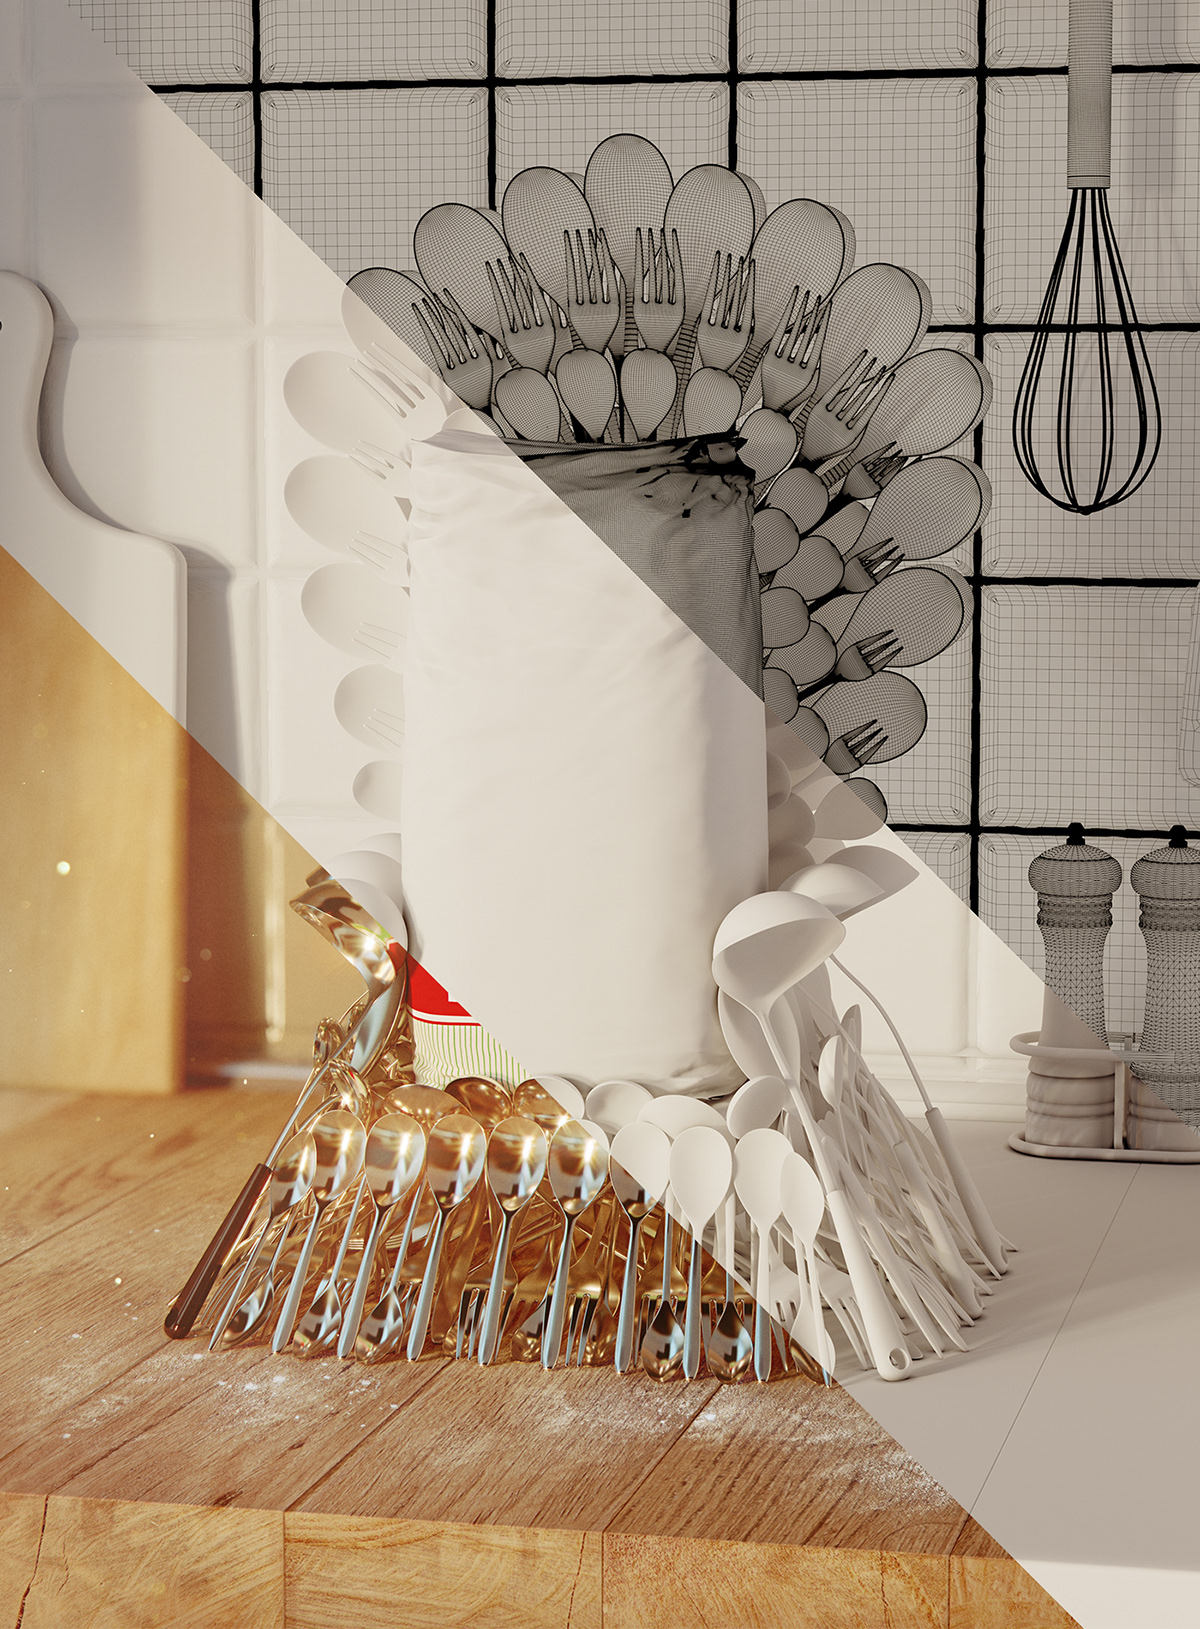 CG ILLUSTRATION  3D Food  table kitchen advertisement spoon